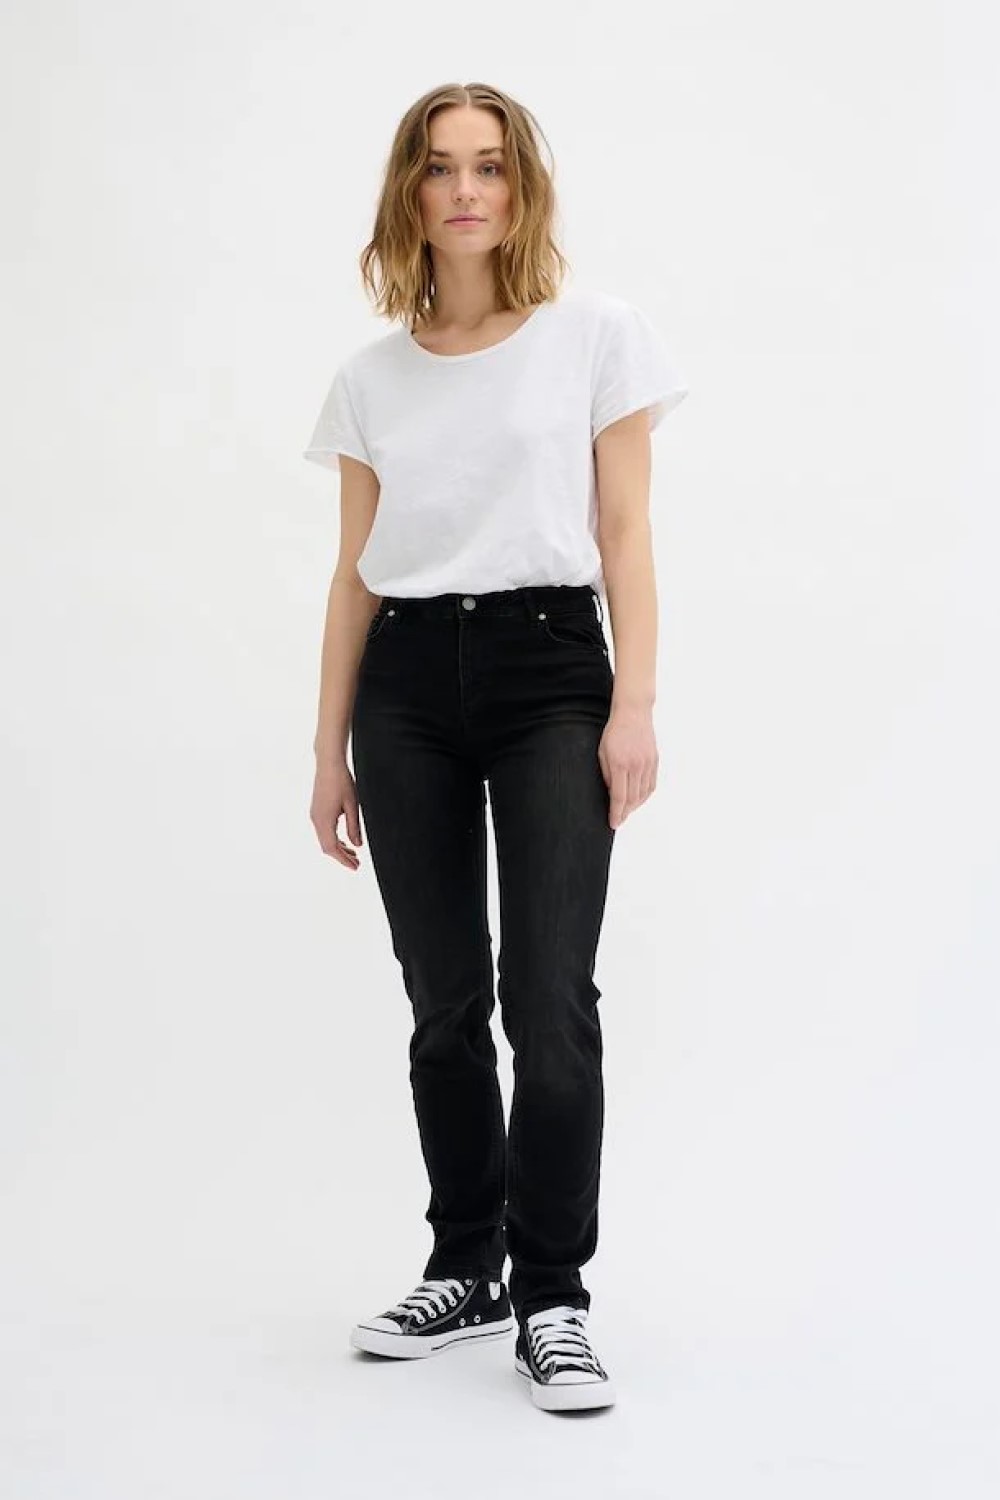 My Essential Wardrobe : The Celina Straight Jeans - jojo Boutique